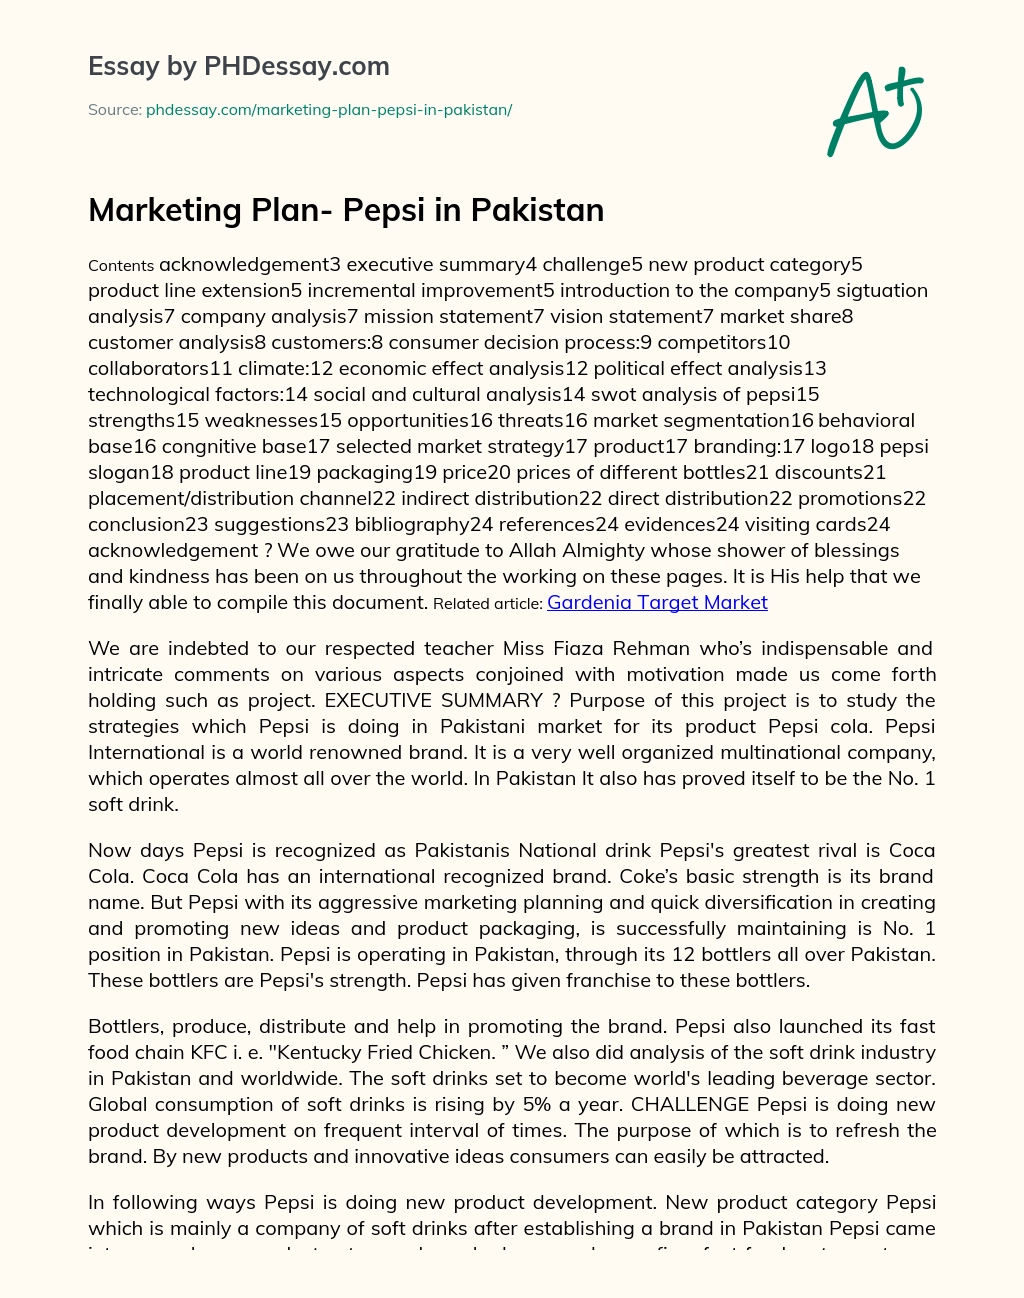 Marketing Plan- Pepsi in Pakistan essay